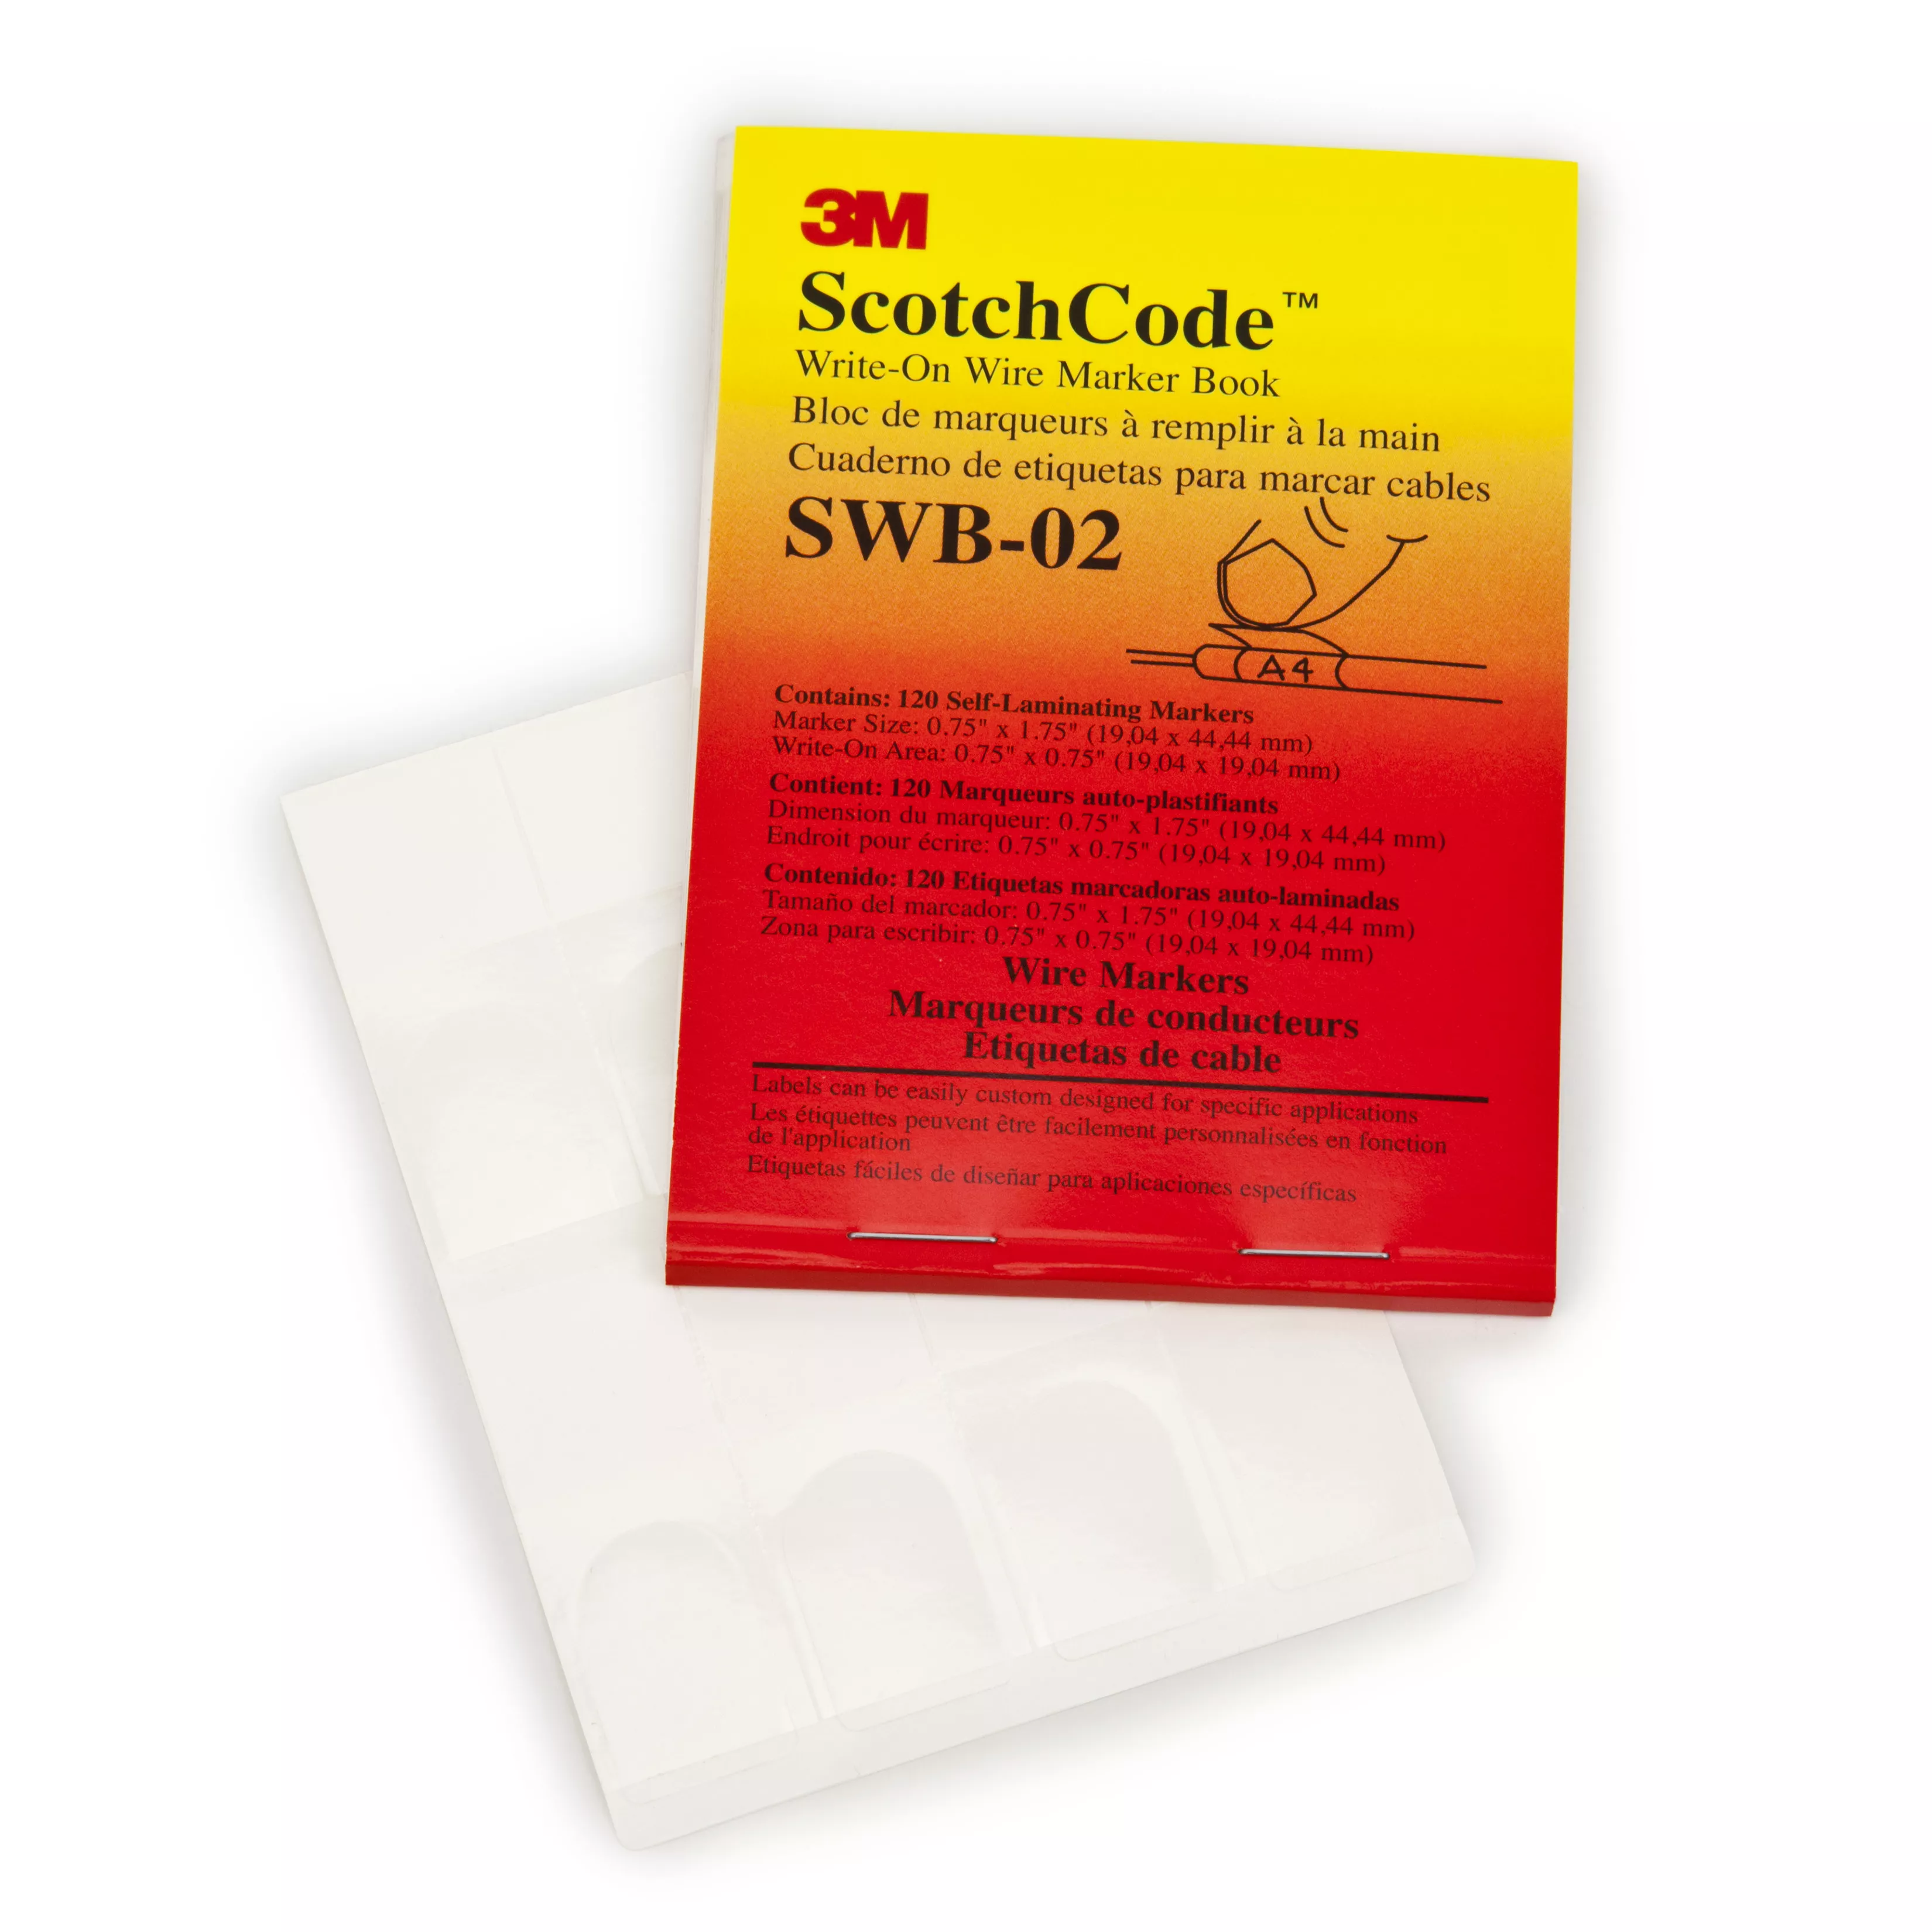 3M™ ScotchCode™ Write-On Wire Marker Book SWB-02, 0.75 in x 1.75 in,
5/Case